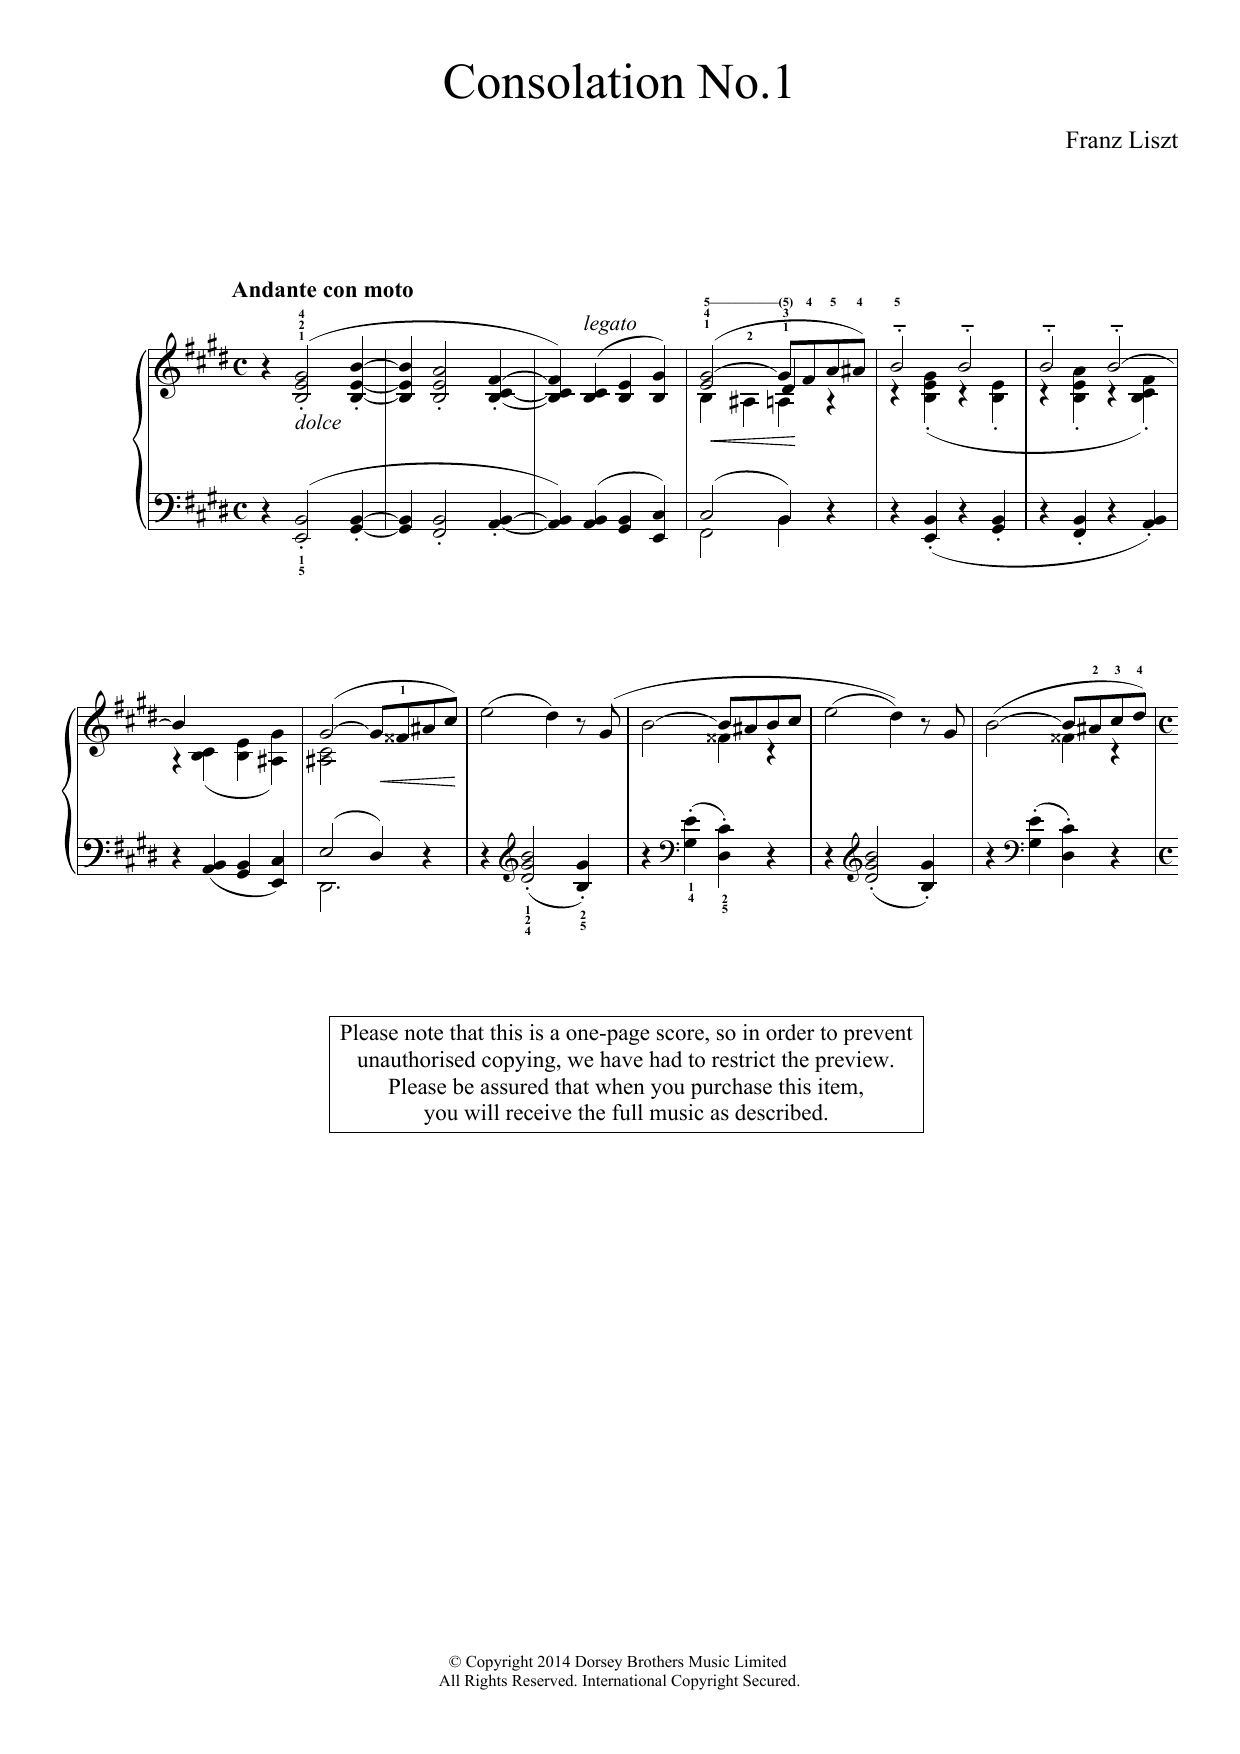 Download Franz Liszt Consolation No.1 Sheet Music